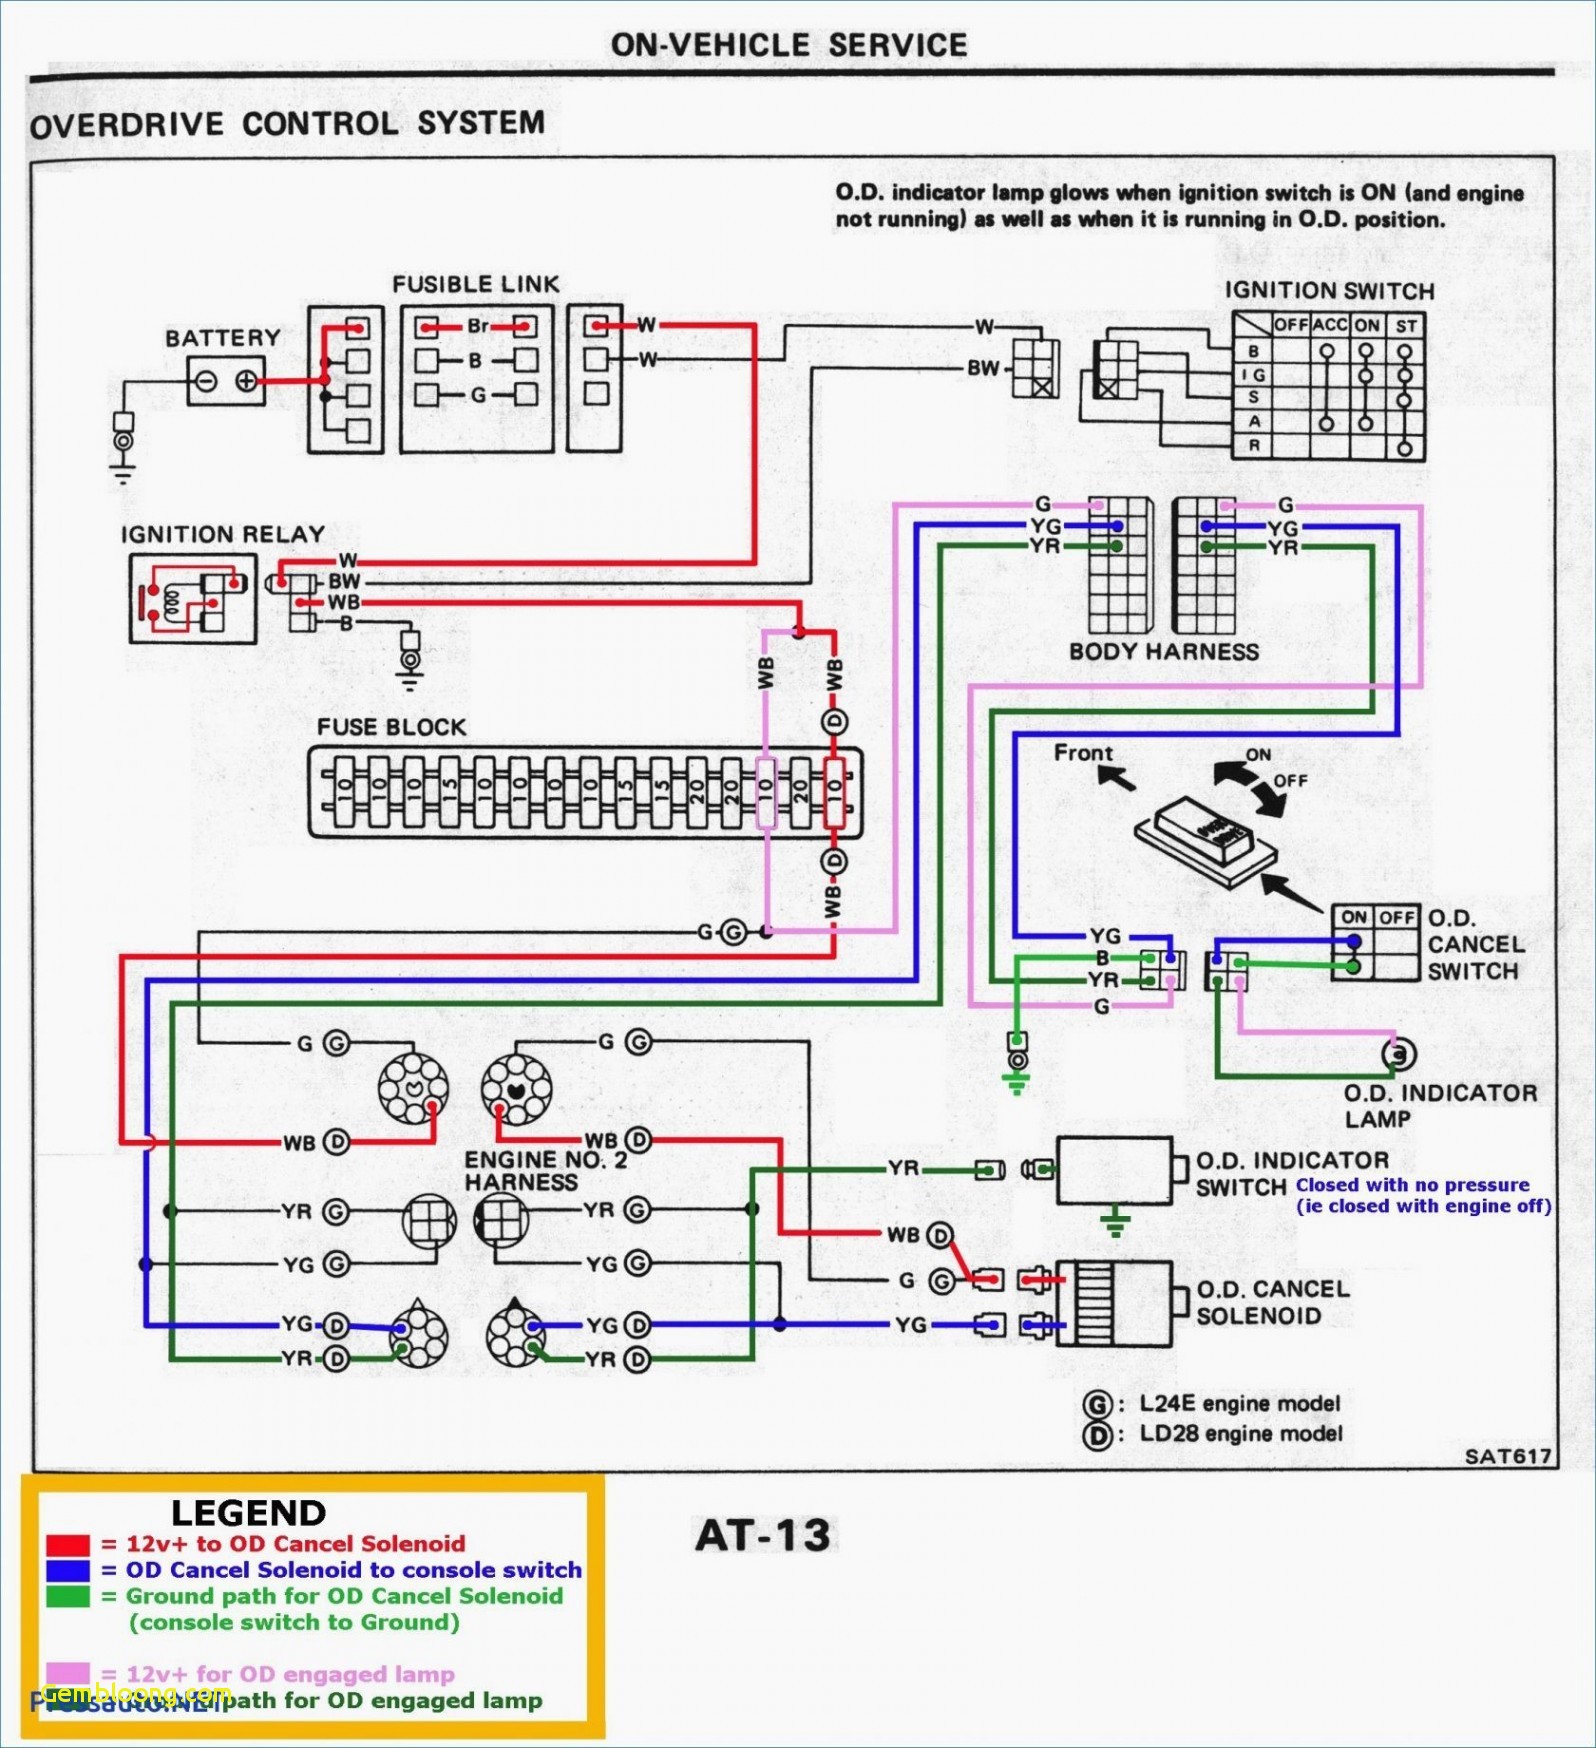 2006 F150 Engine Diagram Free ford Trucks Wiring Diagrams Wiring Diagram for ford F150 Of 2006 F150 Engine Diagram